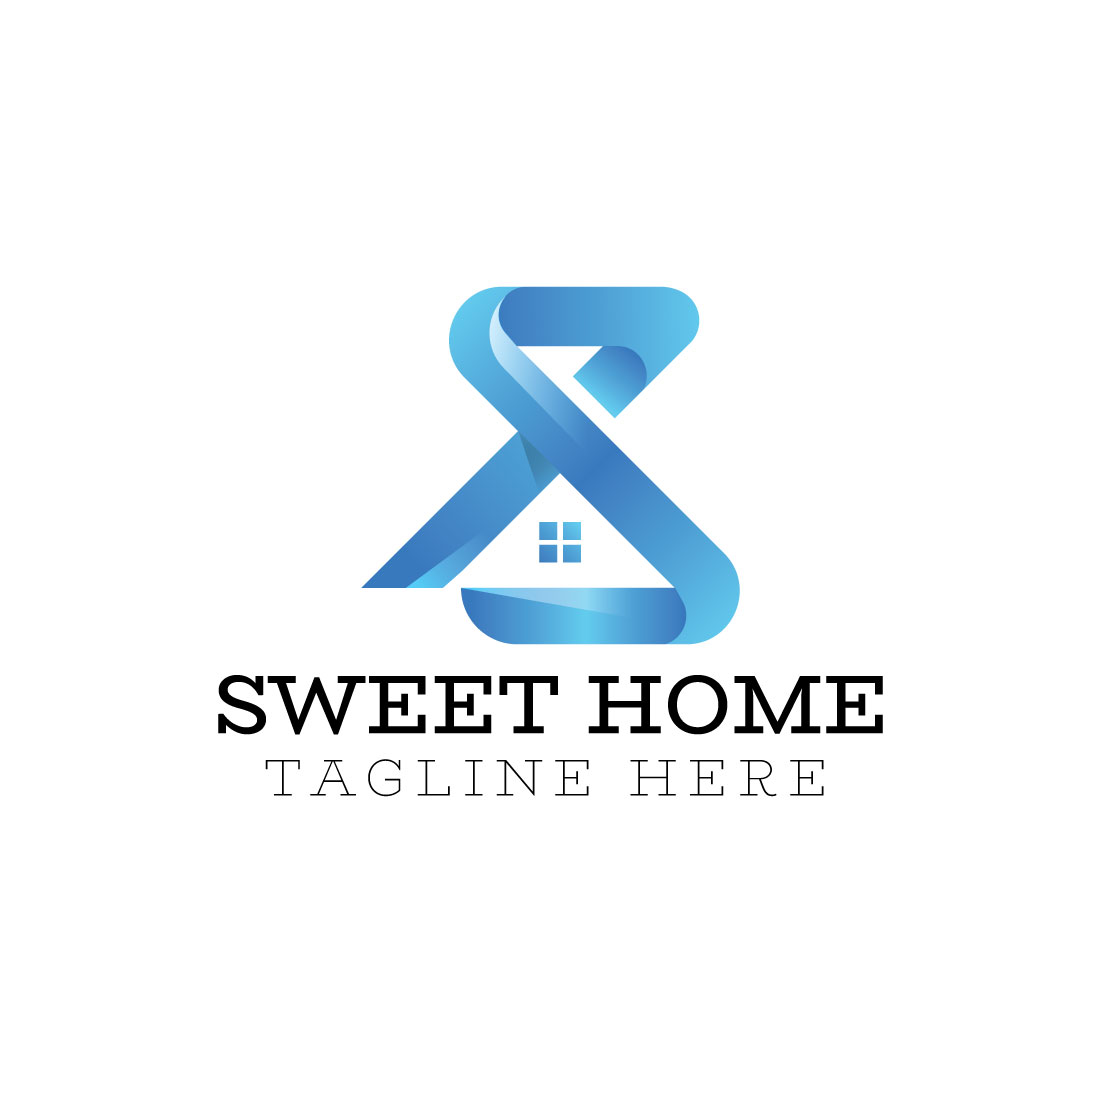 Letter S home logo design preview image.